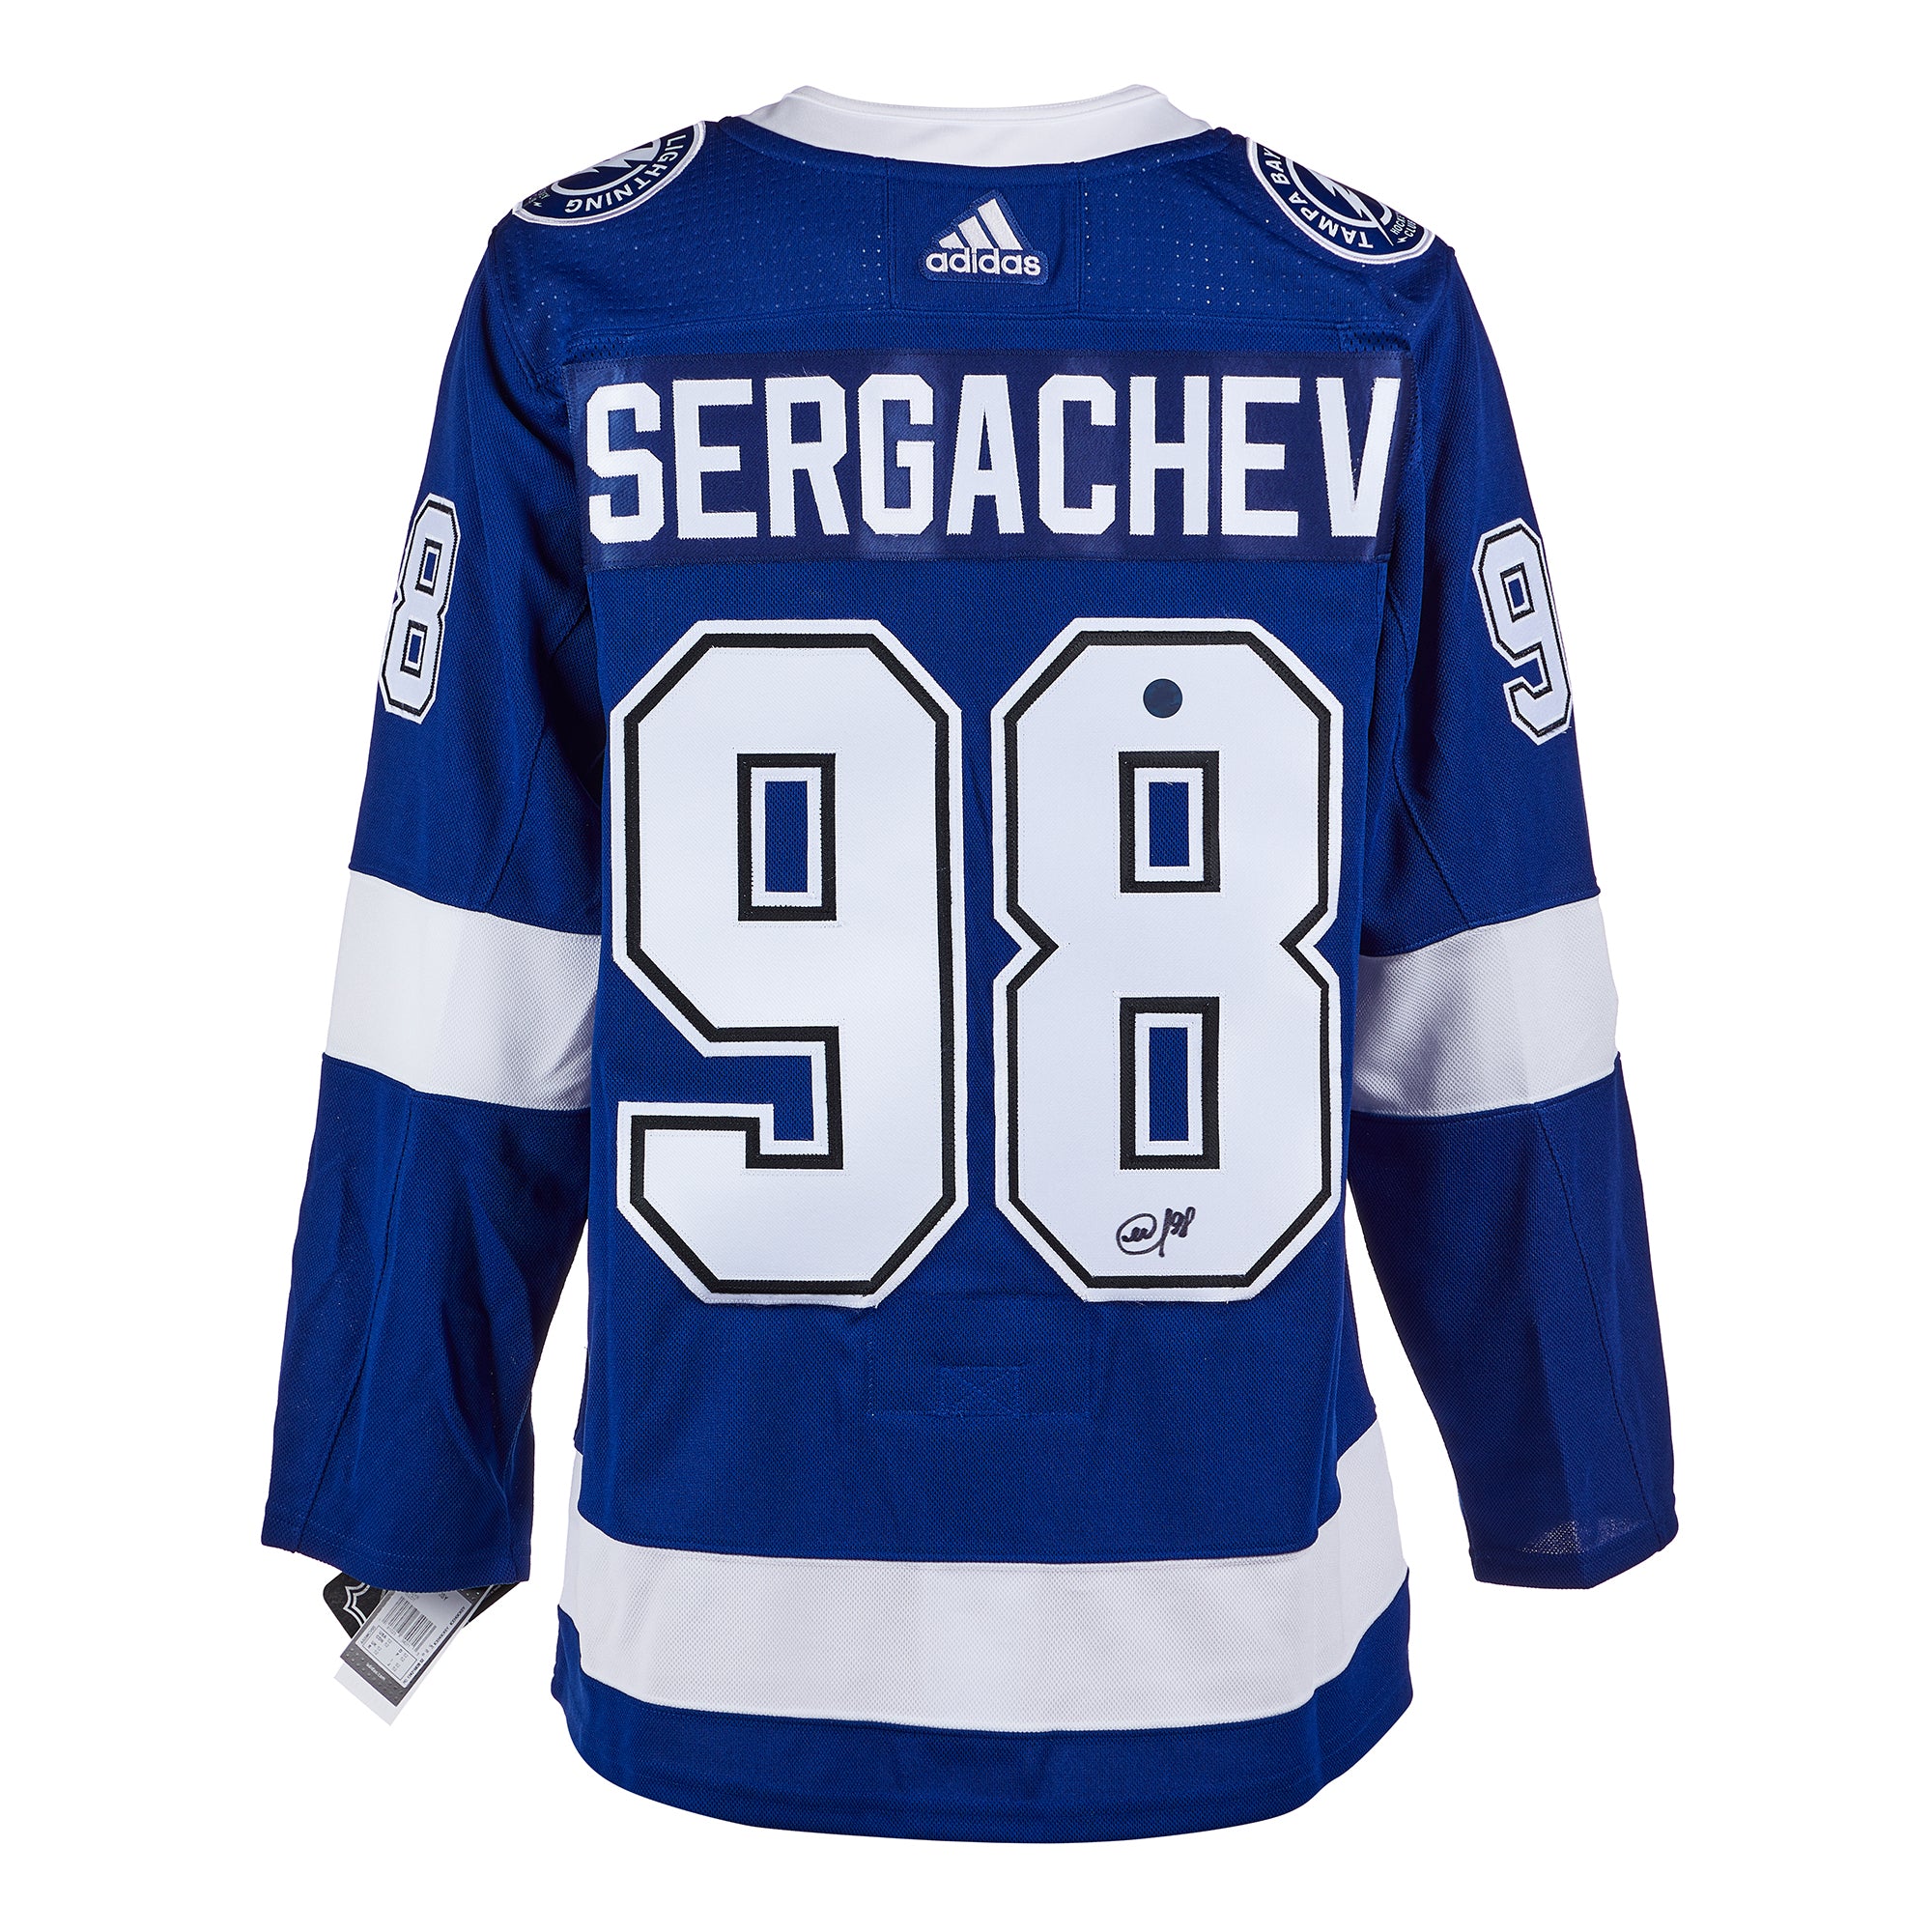 Mikhail Sergachev Tampa Bay Lightning Autographed Adidas Jersey